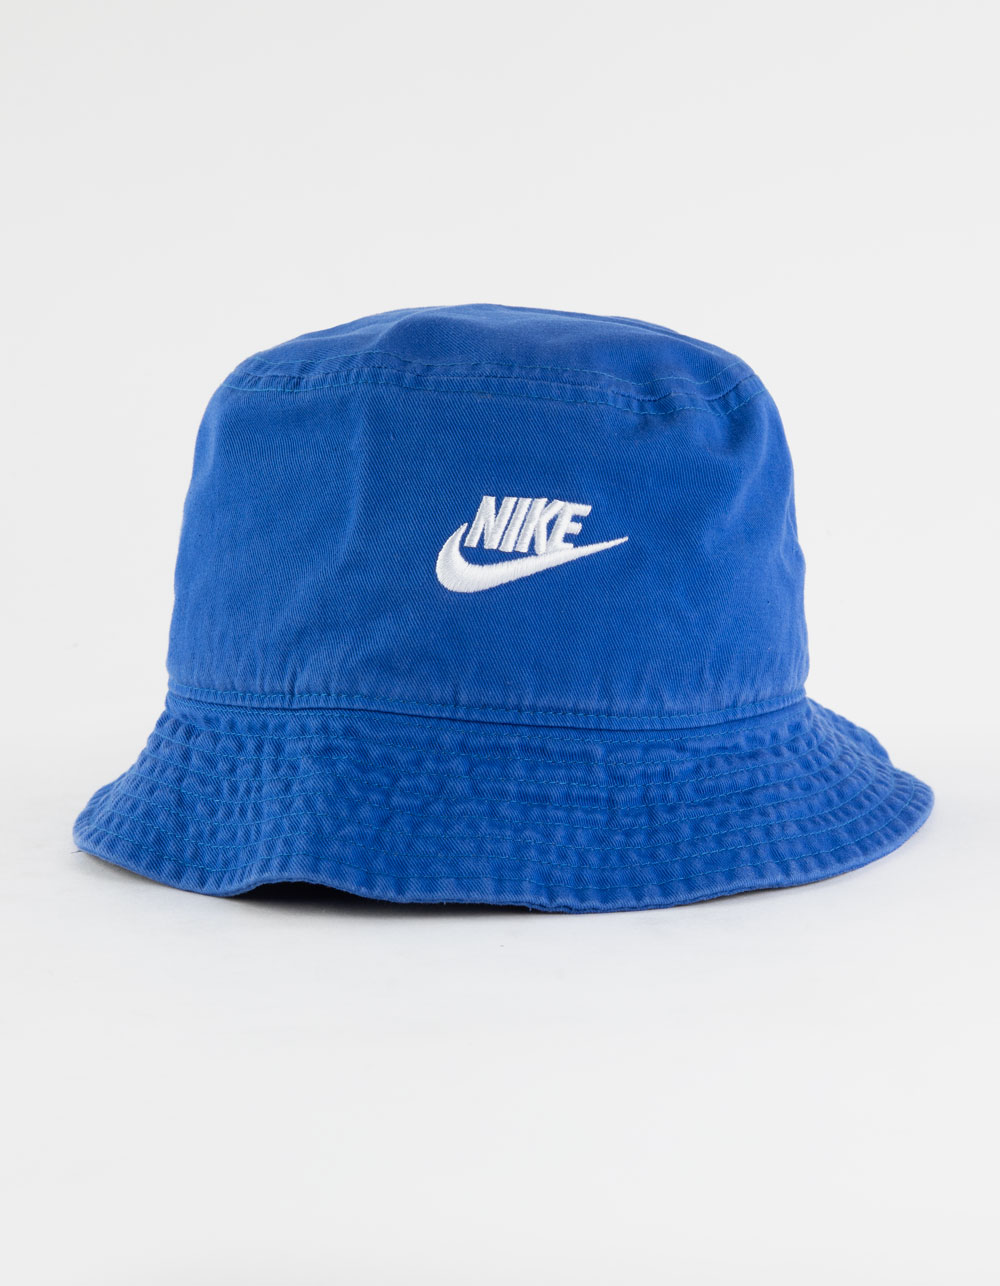 NIKE Apex Bucket Hat - BLUE | Tillys